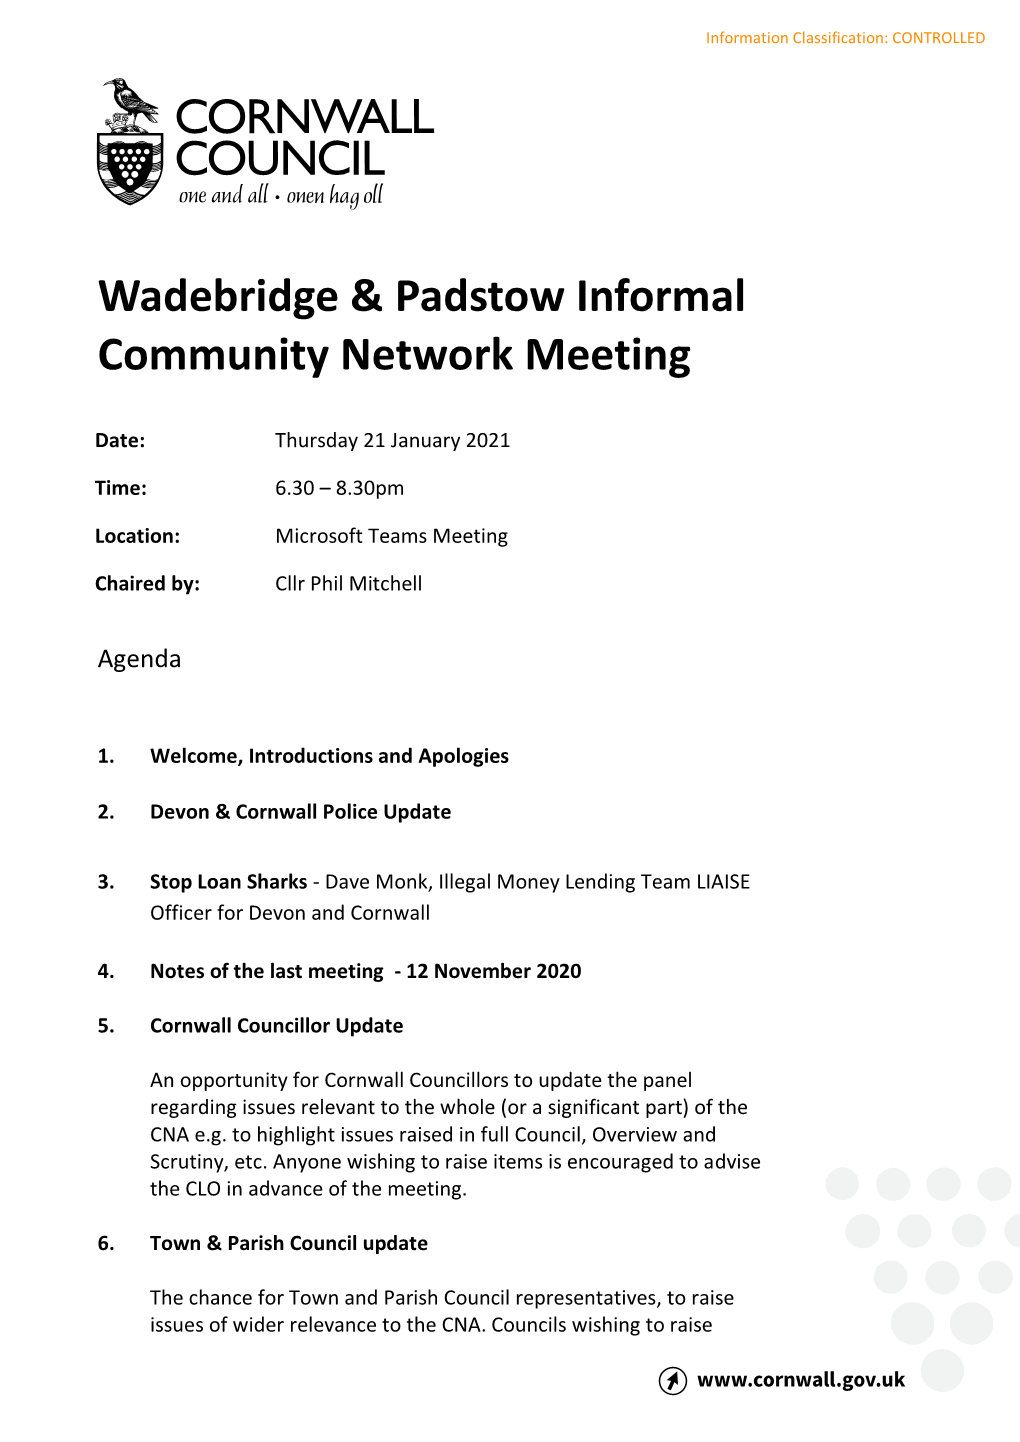 Wadebridge & Padstow Informal Community Network Meeting